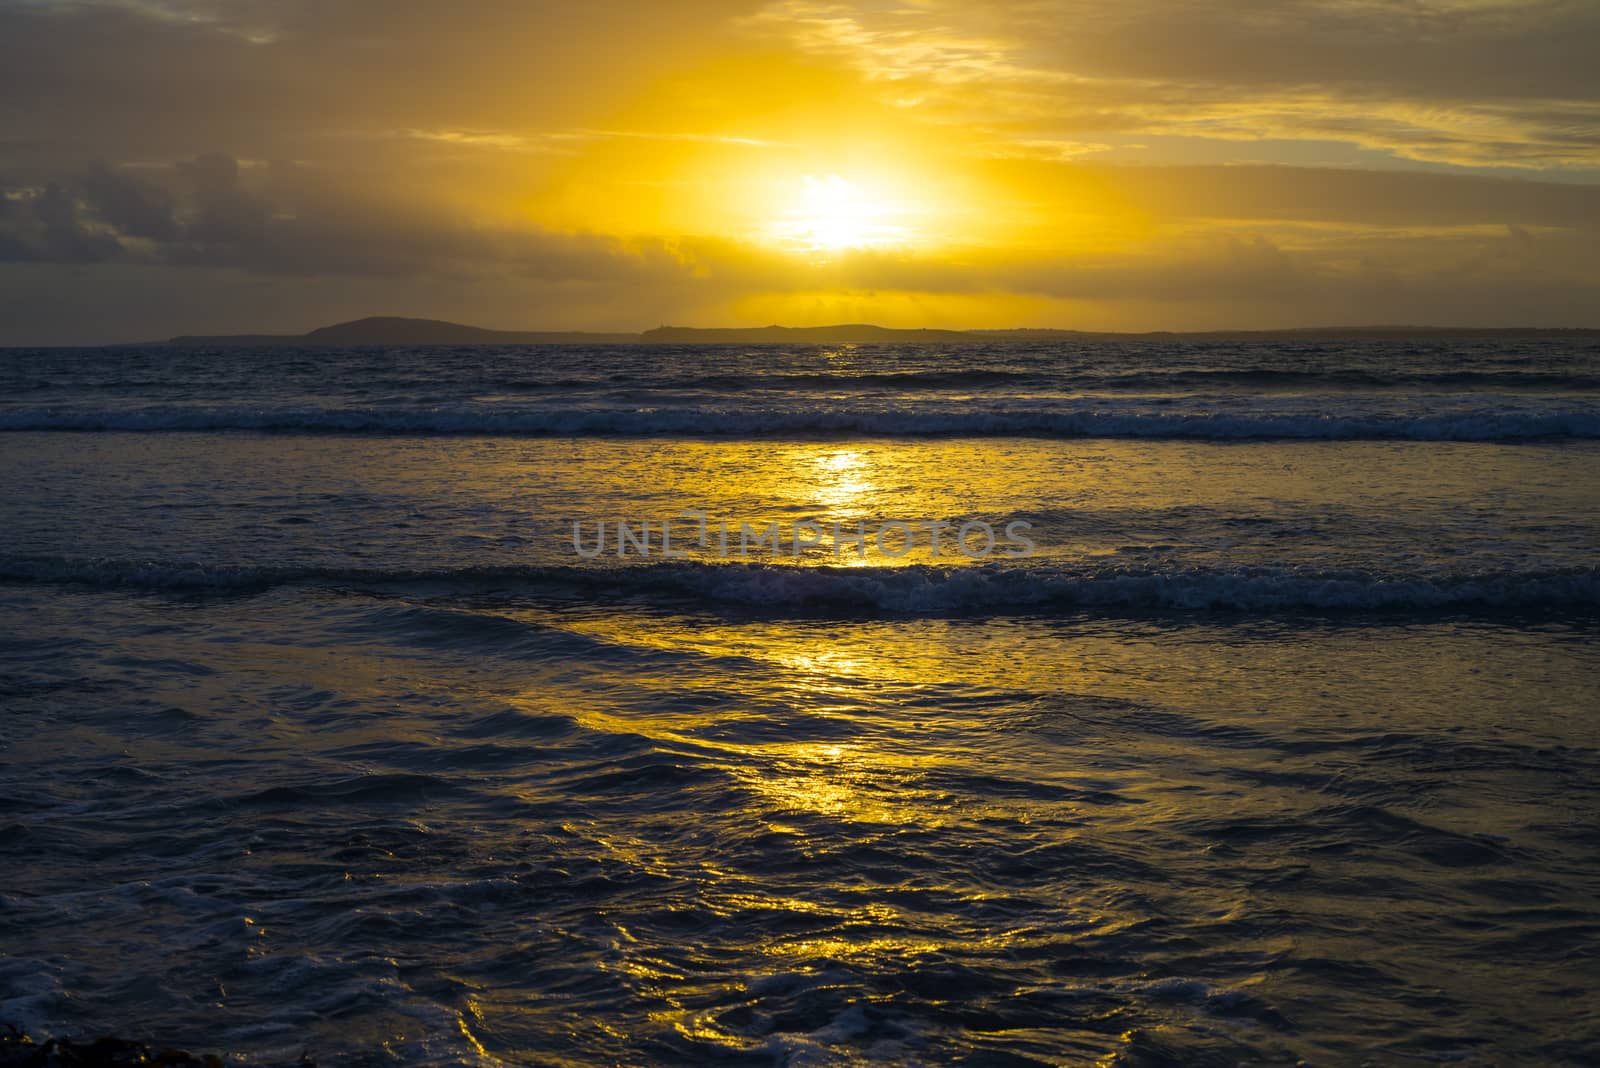 beal beach near ballybunion on the wild atlantic way ireland with an orange sunset